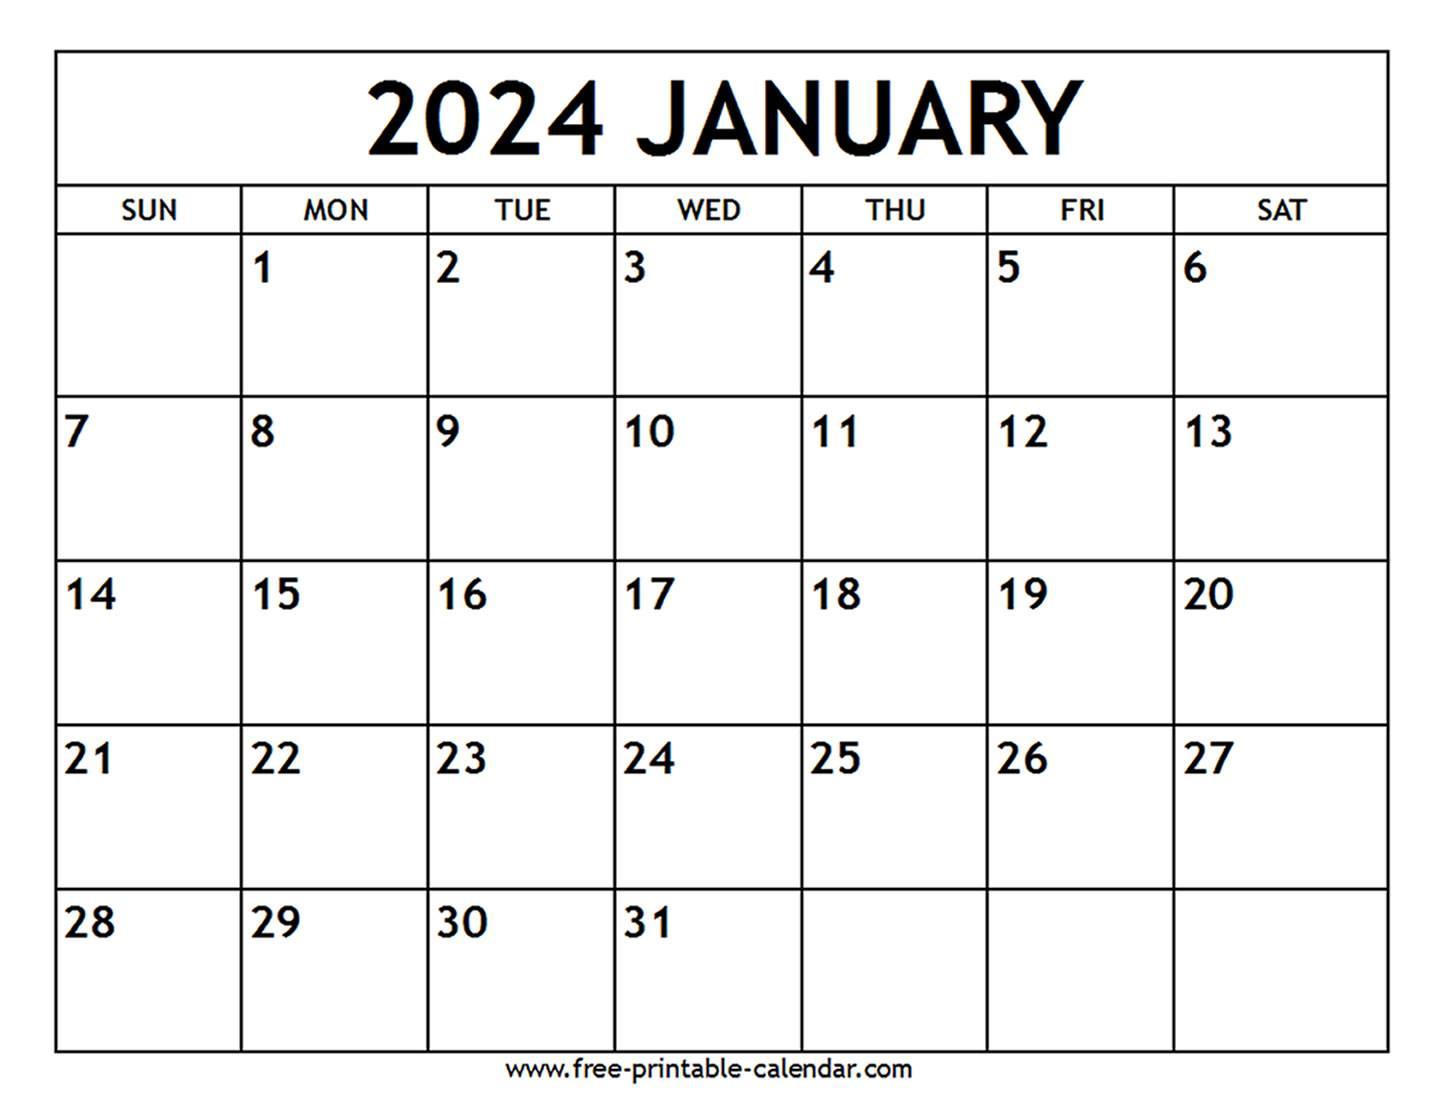 January 2024 Calendar - Free-Printable-Calendar | Calendar January 2024 Printable Free